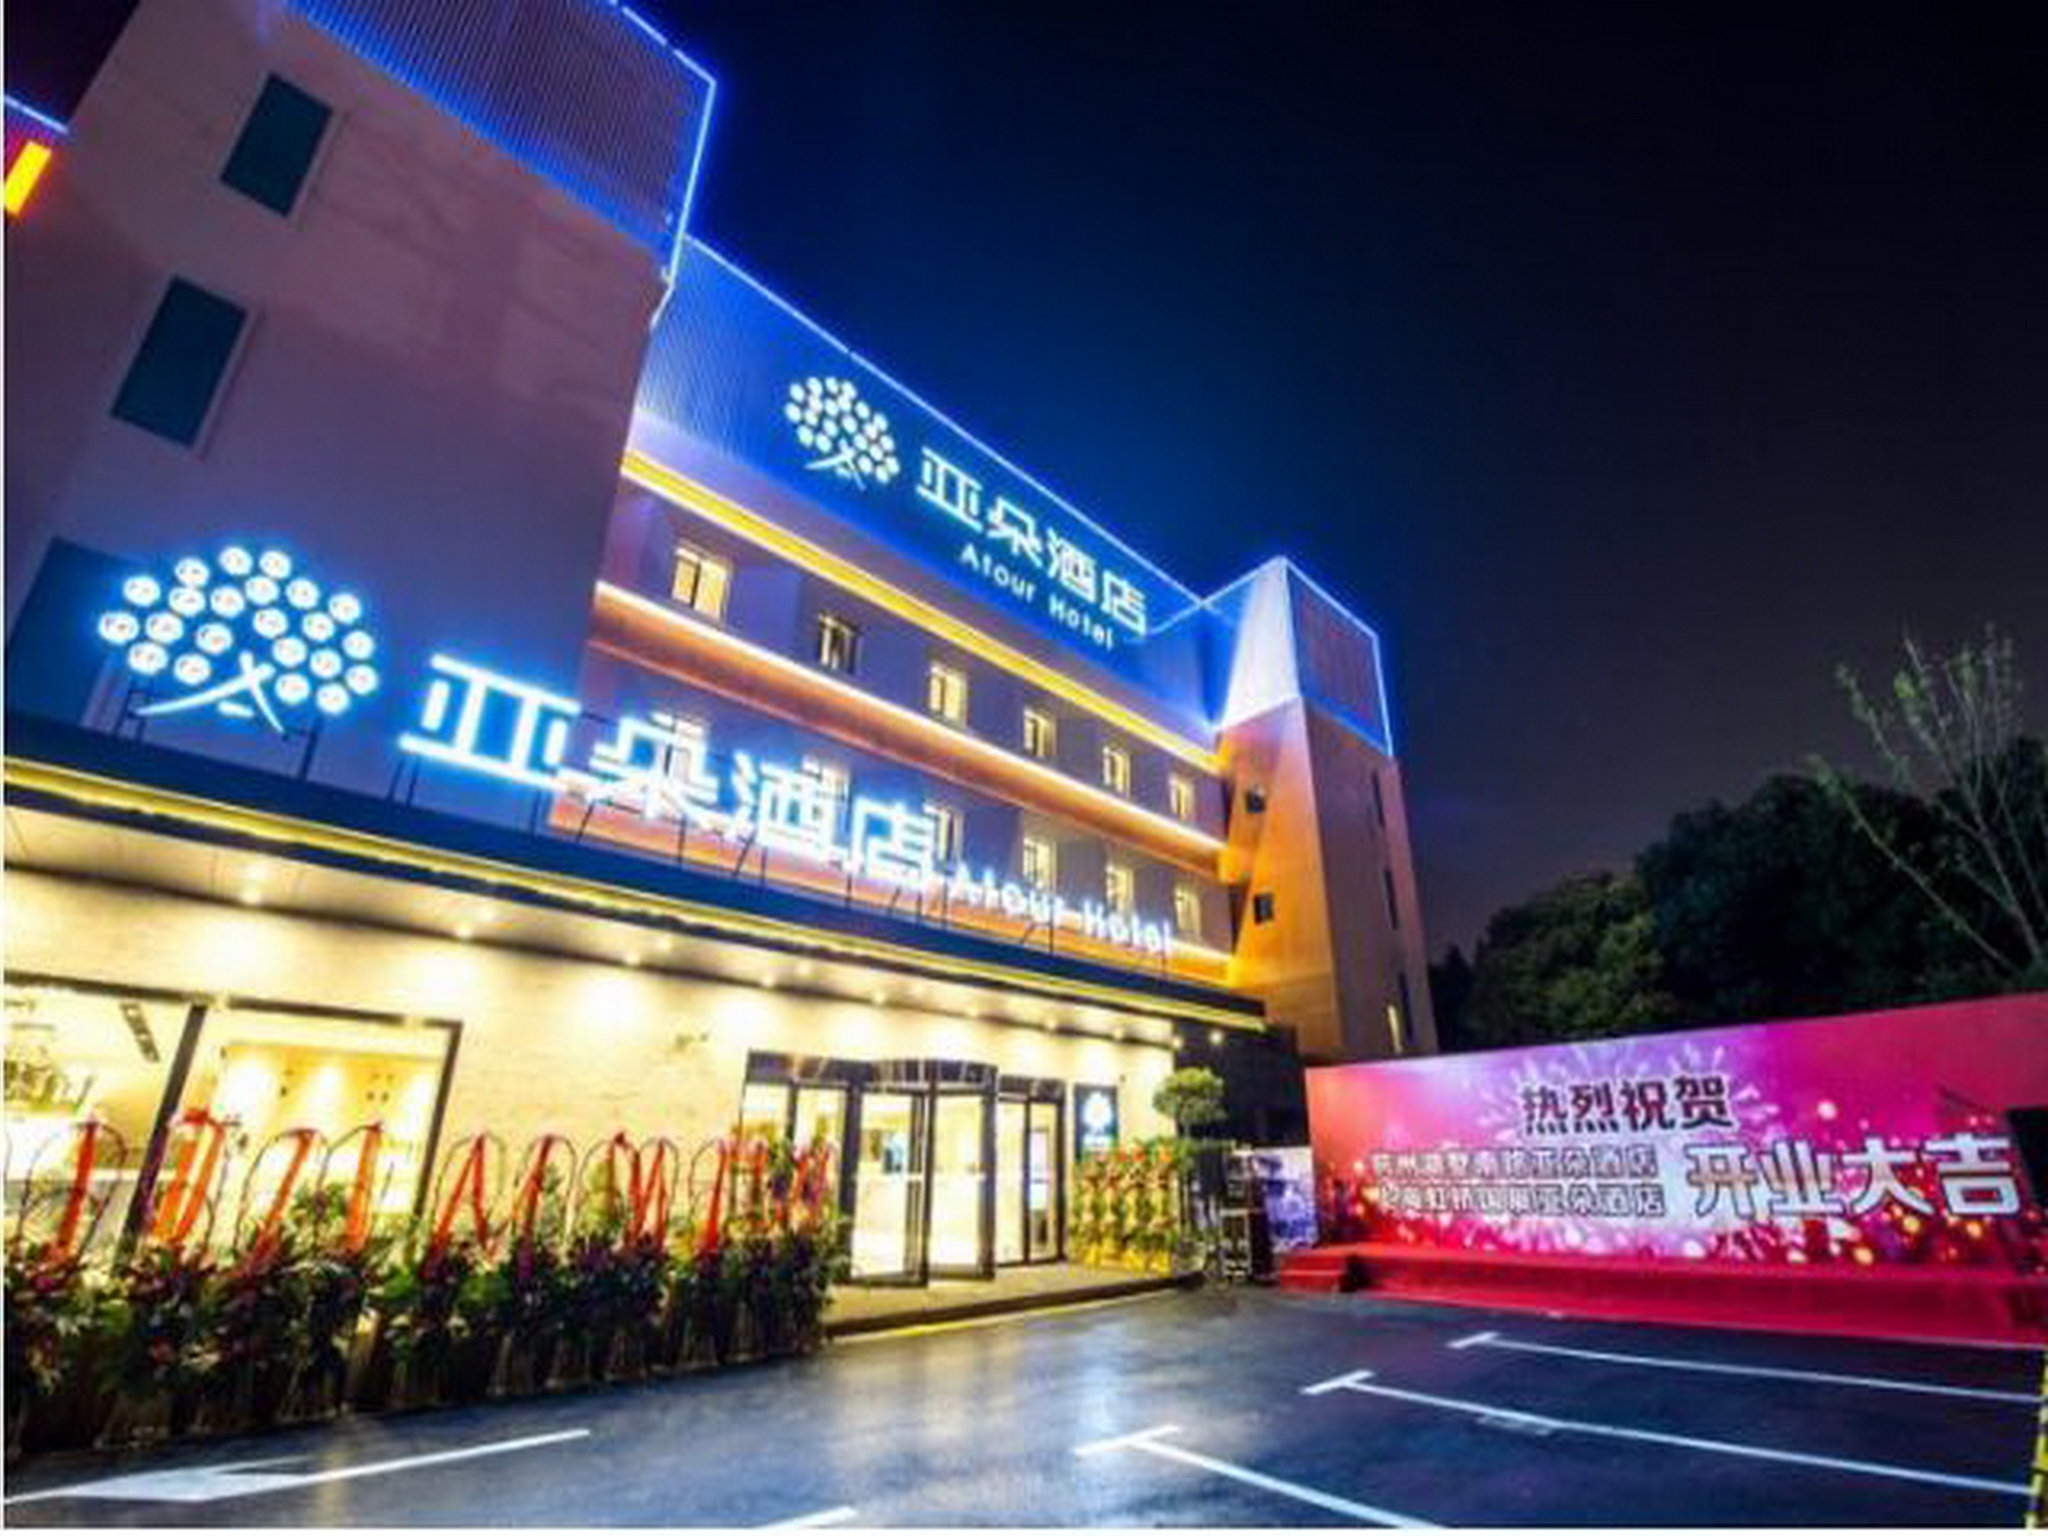 Atour Hotel Hongqiao National Exhibition Center Shanghai